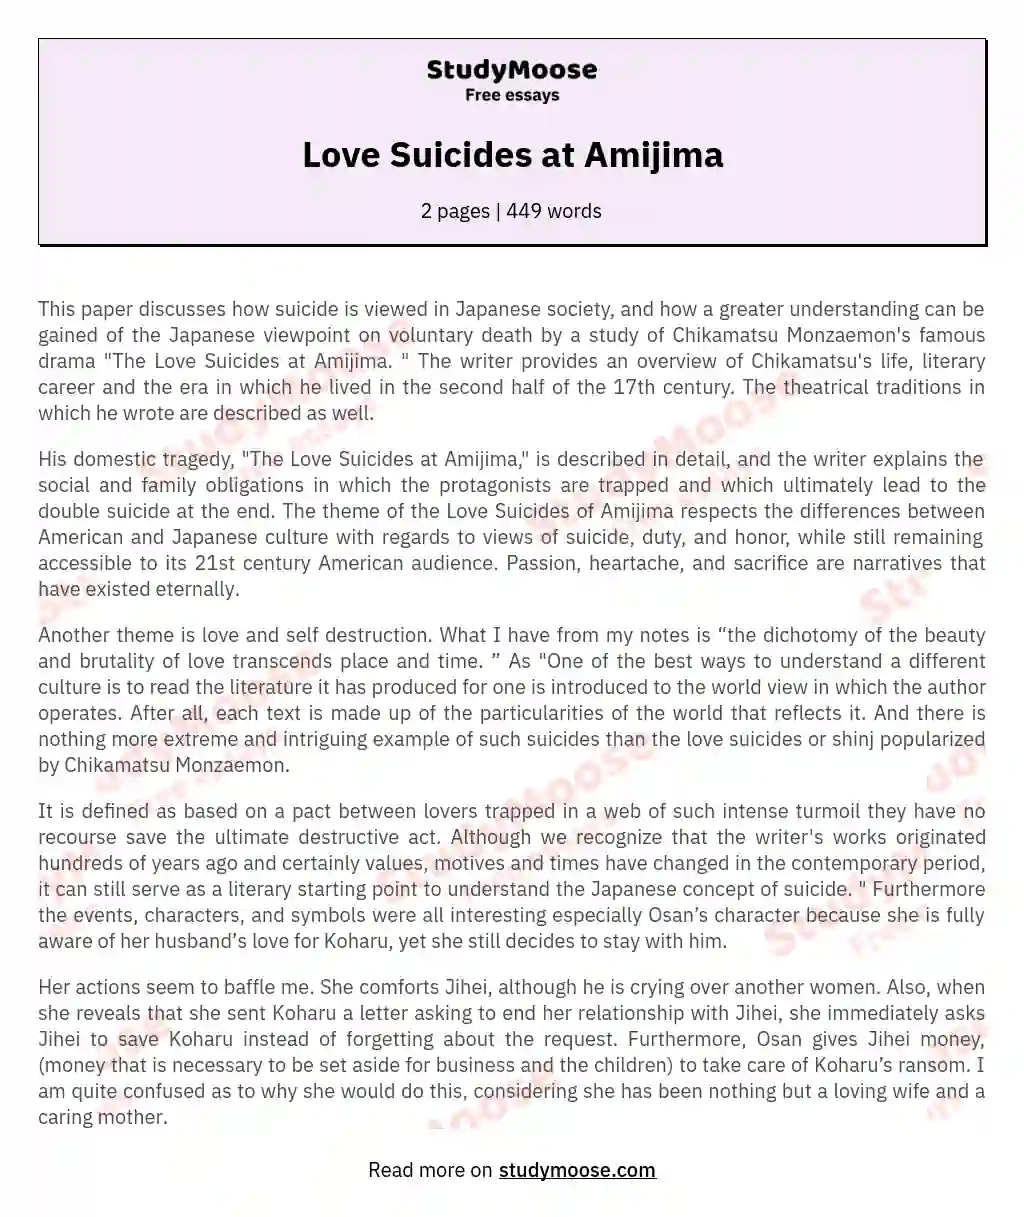 Love Suicides at Amijima essay